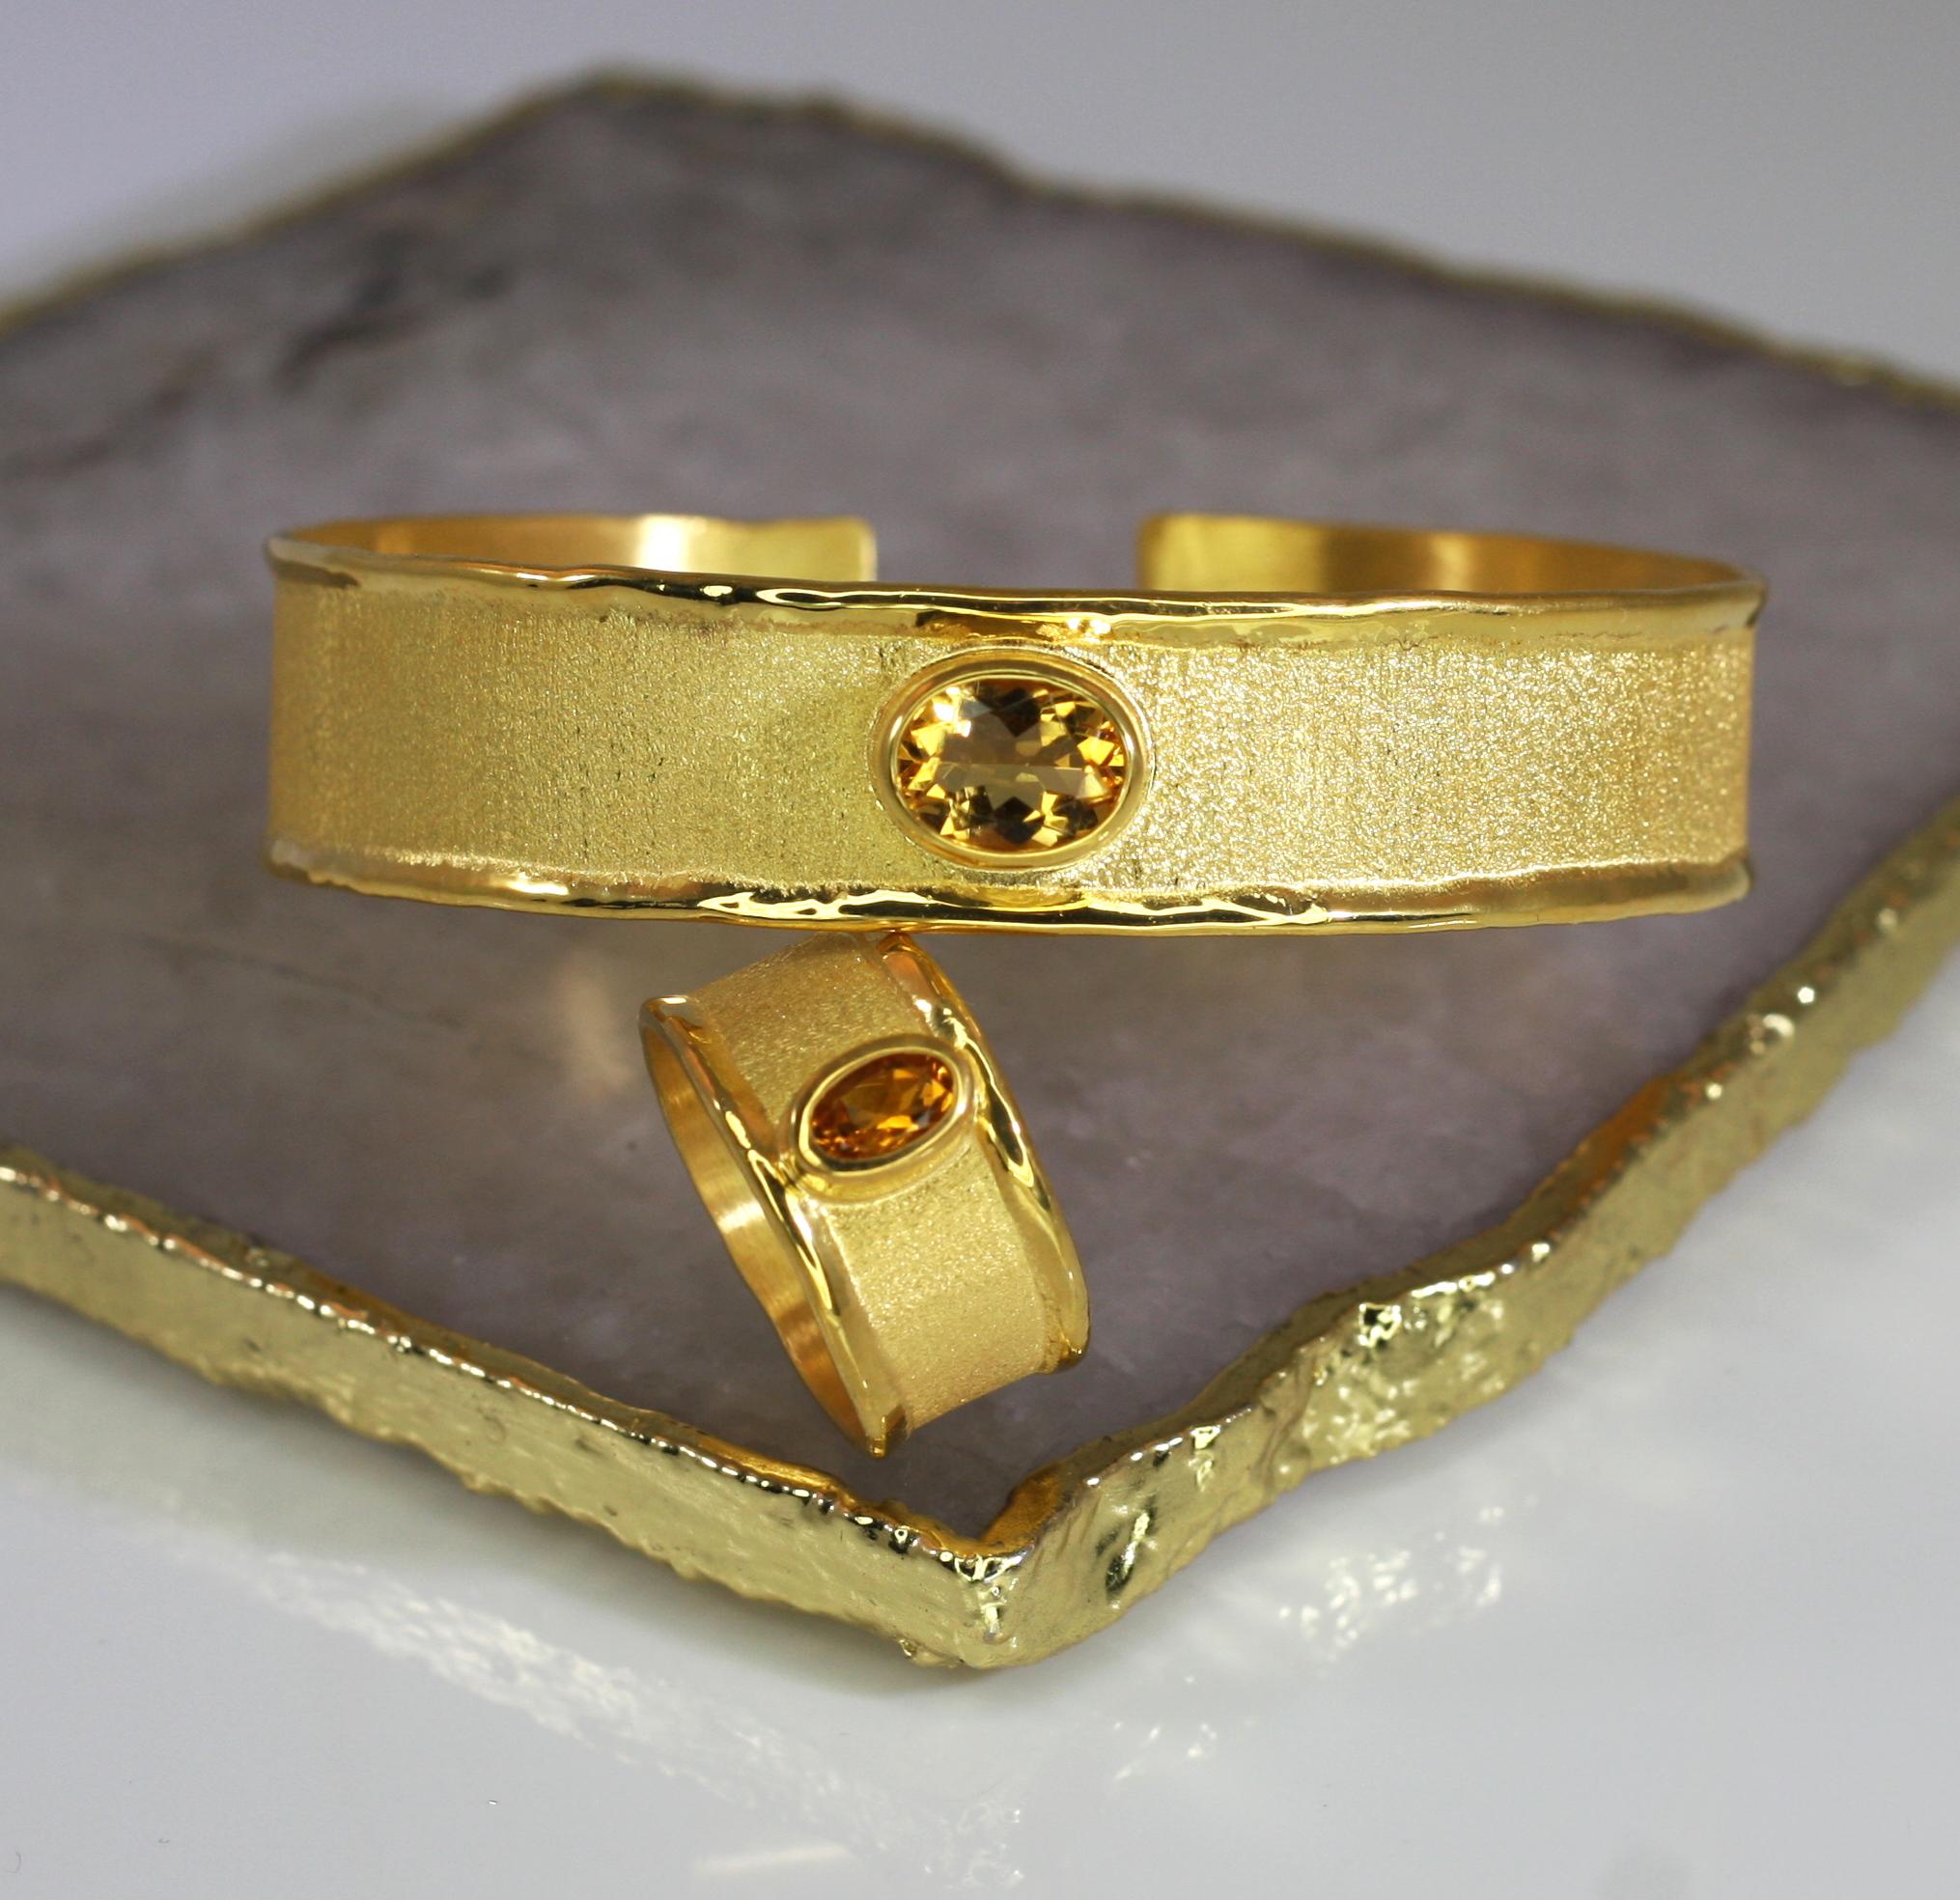 Yianni Creations 18 Karat Gold Bangle Bracelet with Citrine For Sale 1